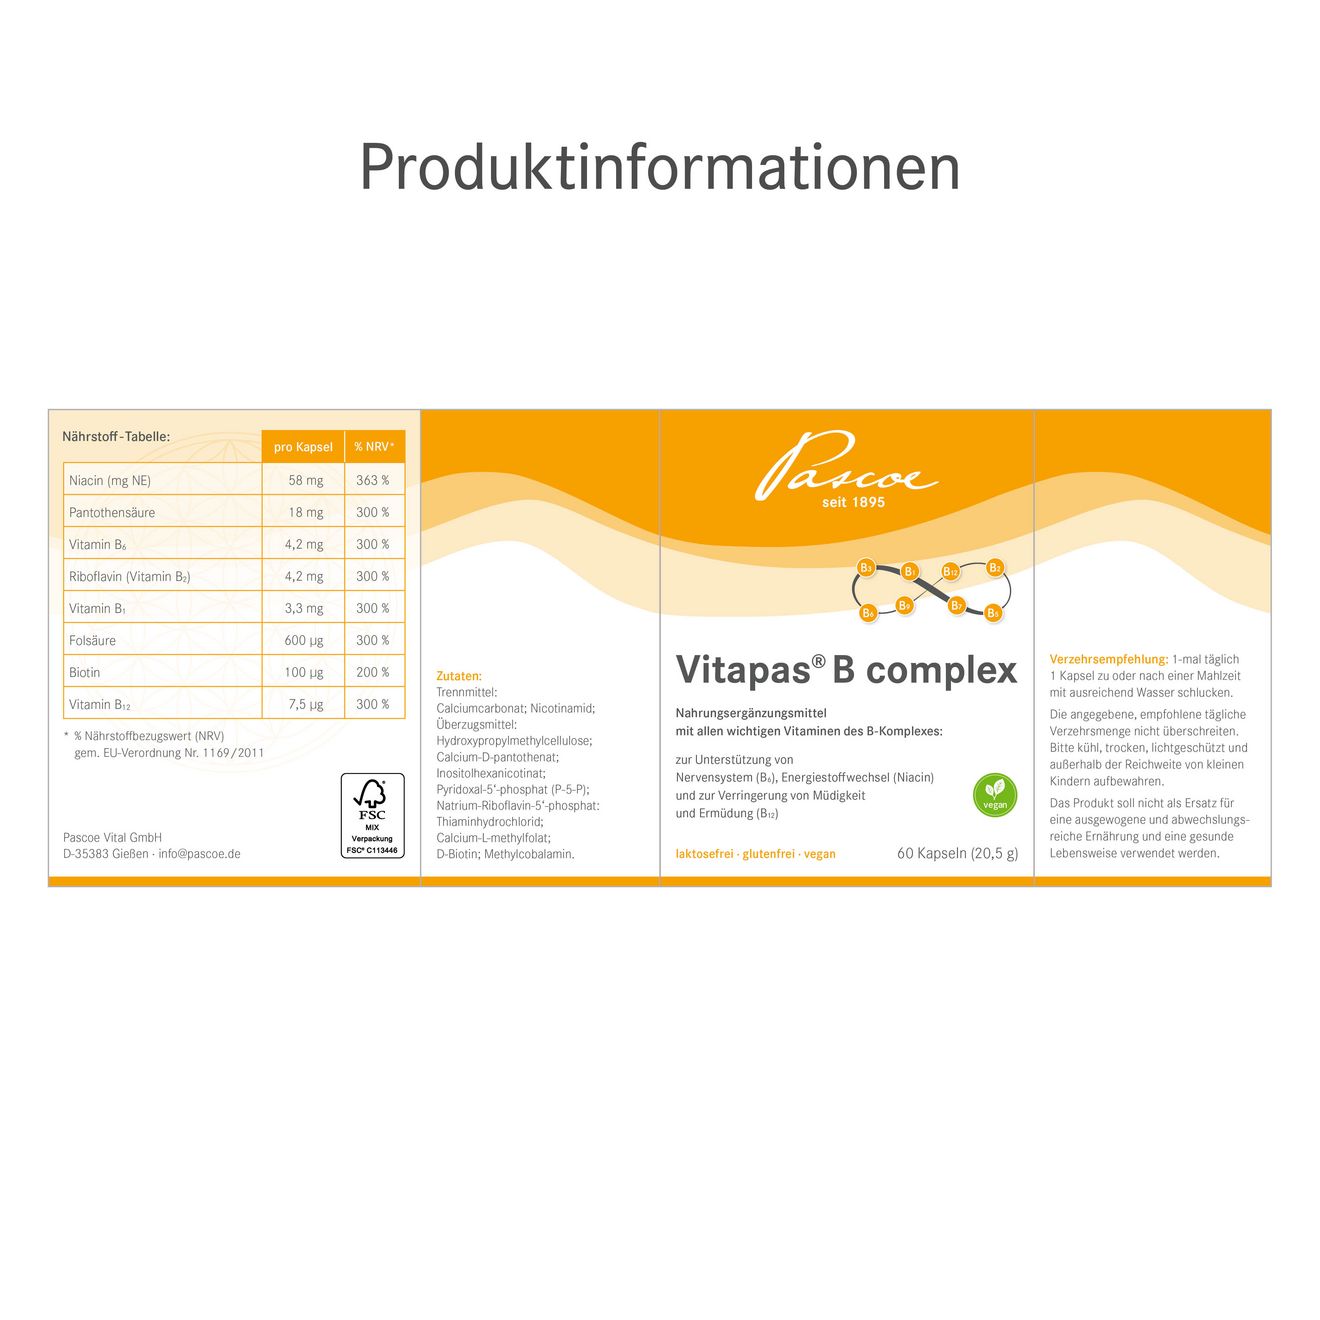 Vitapas B complex Produktinformationen